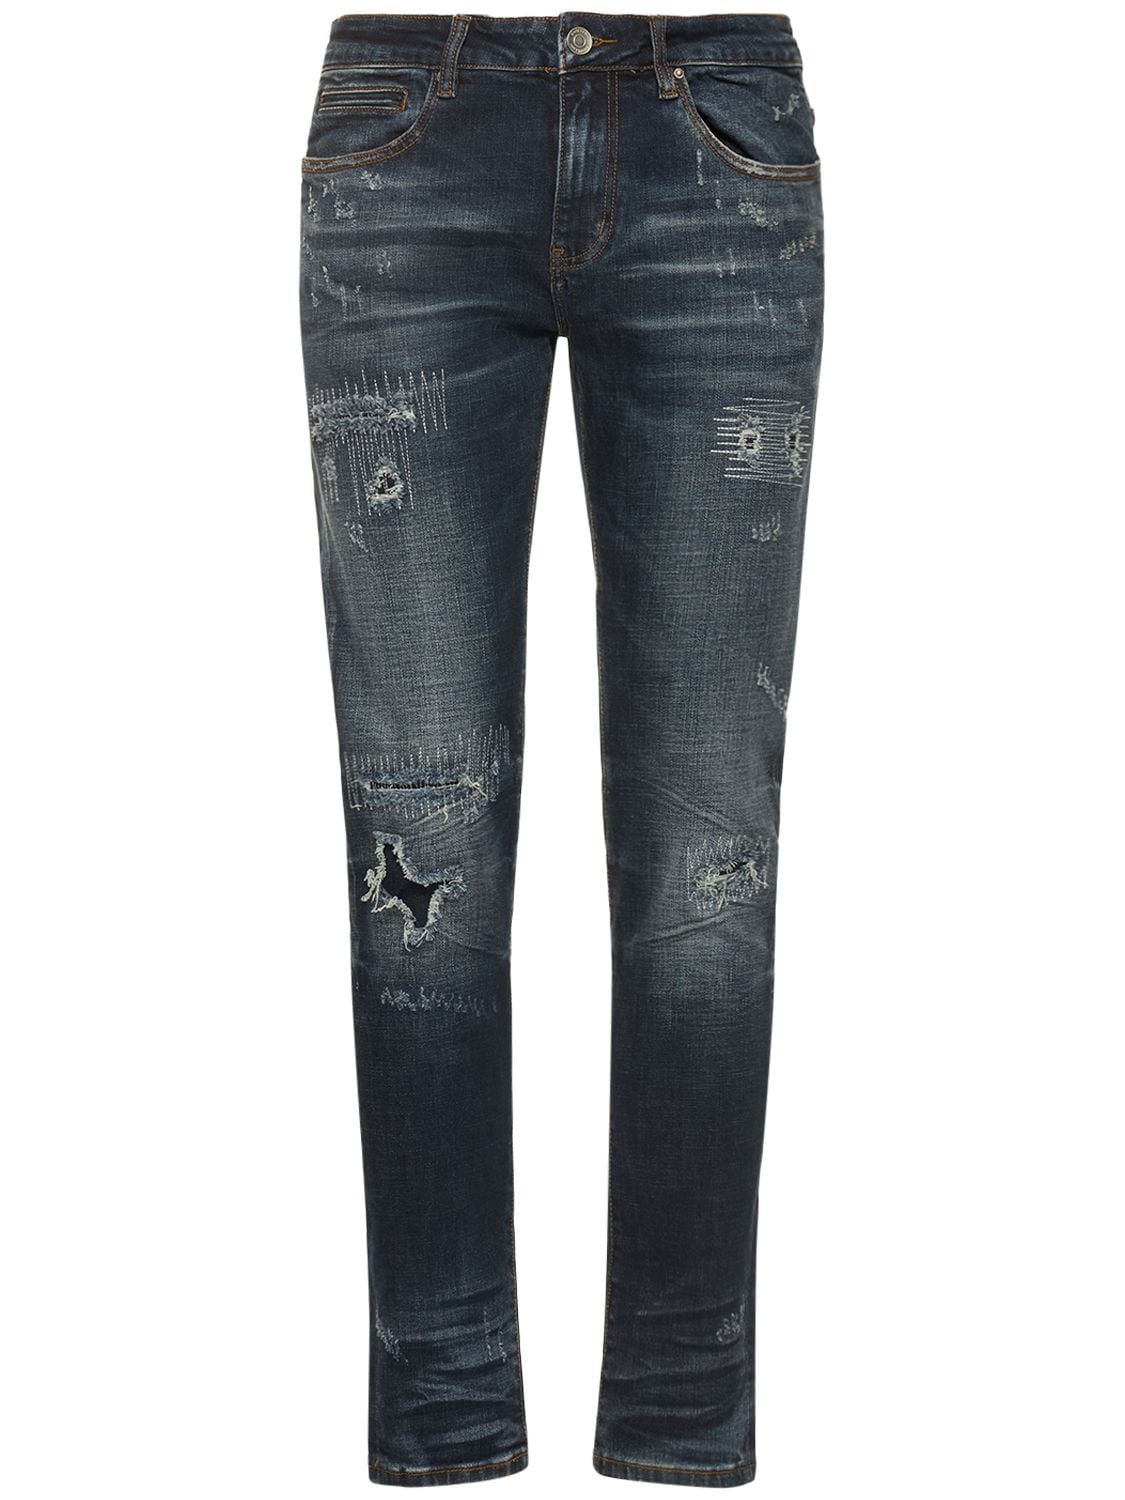 EMBELLISH Slate Standard Cotton Denim Jeans